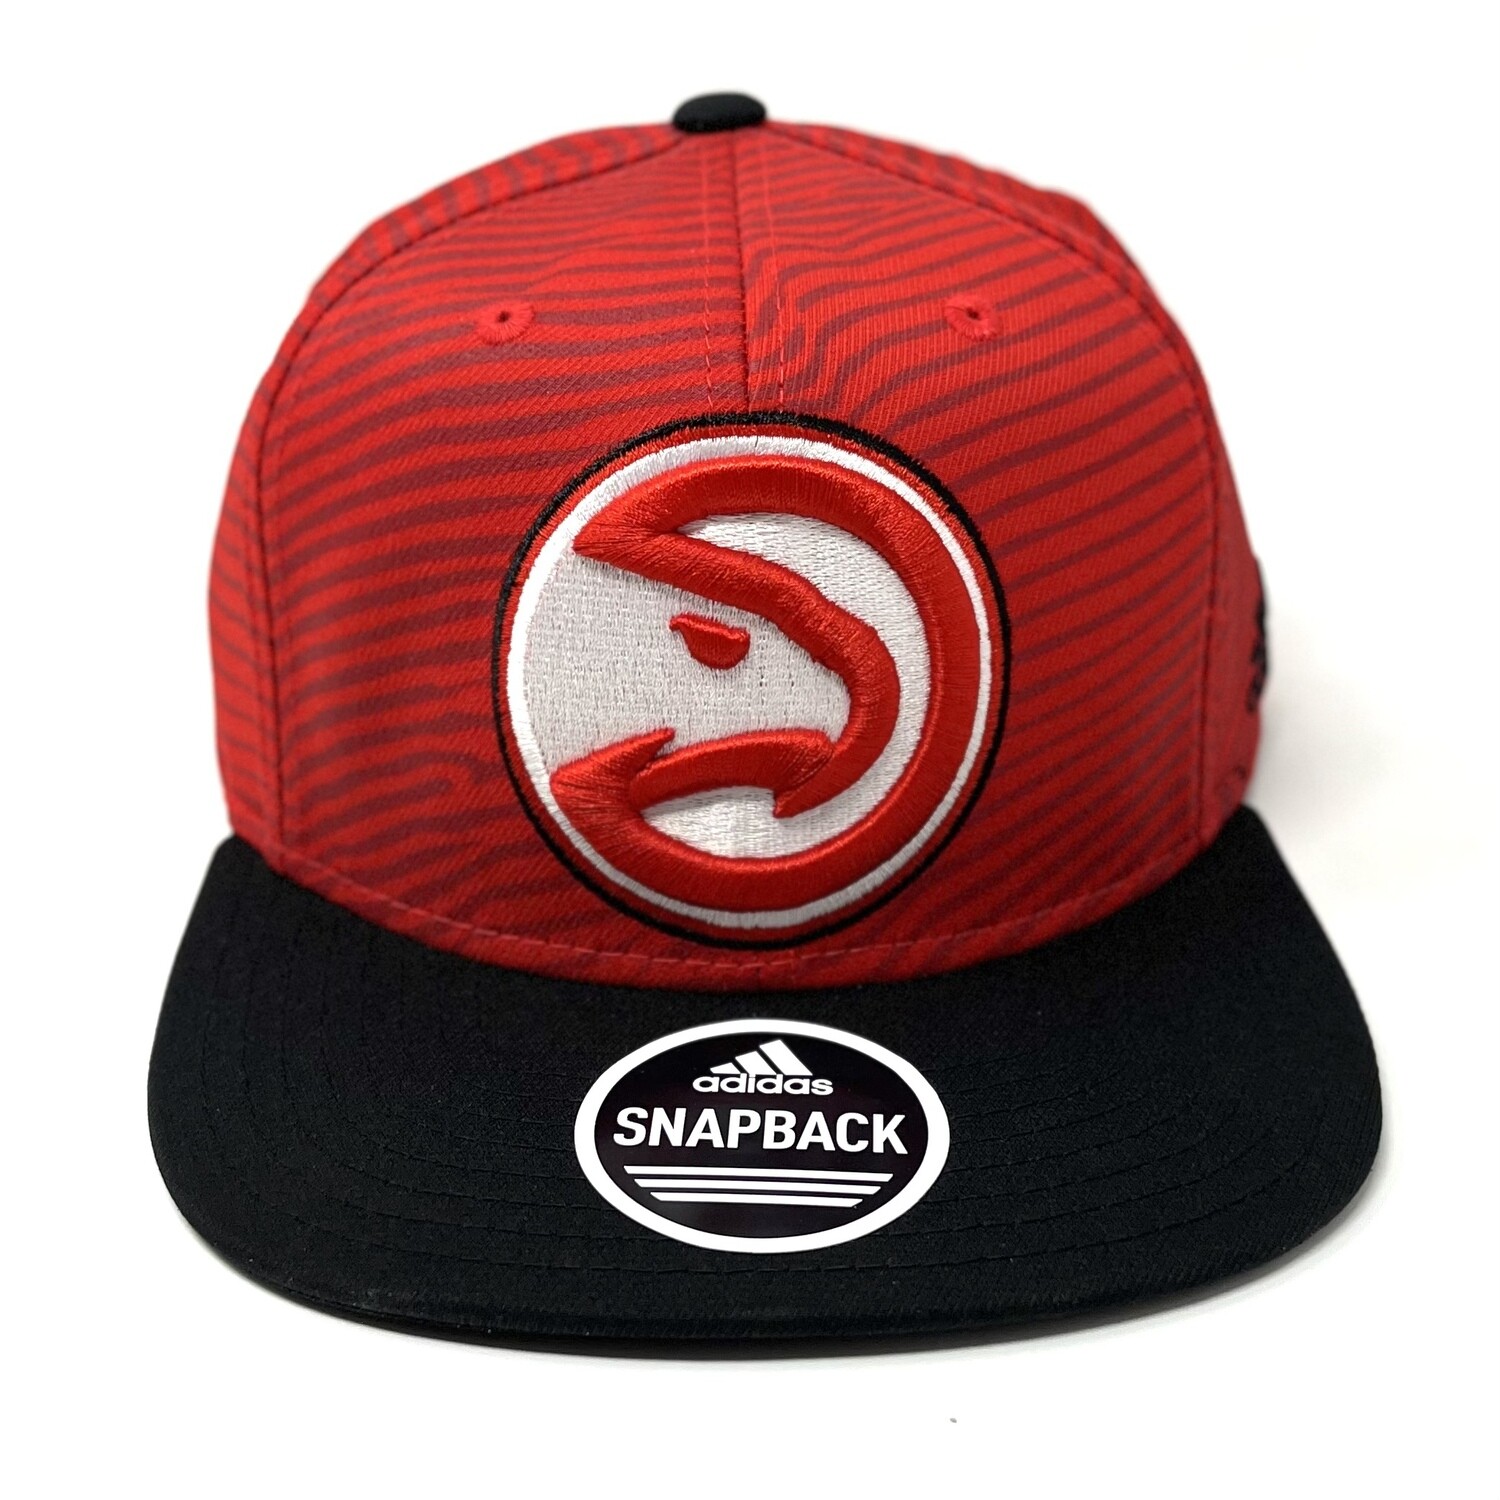 Atlanta Hawks Men's Adidas Snapback Adjustable Hat